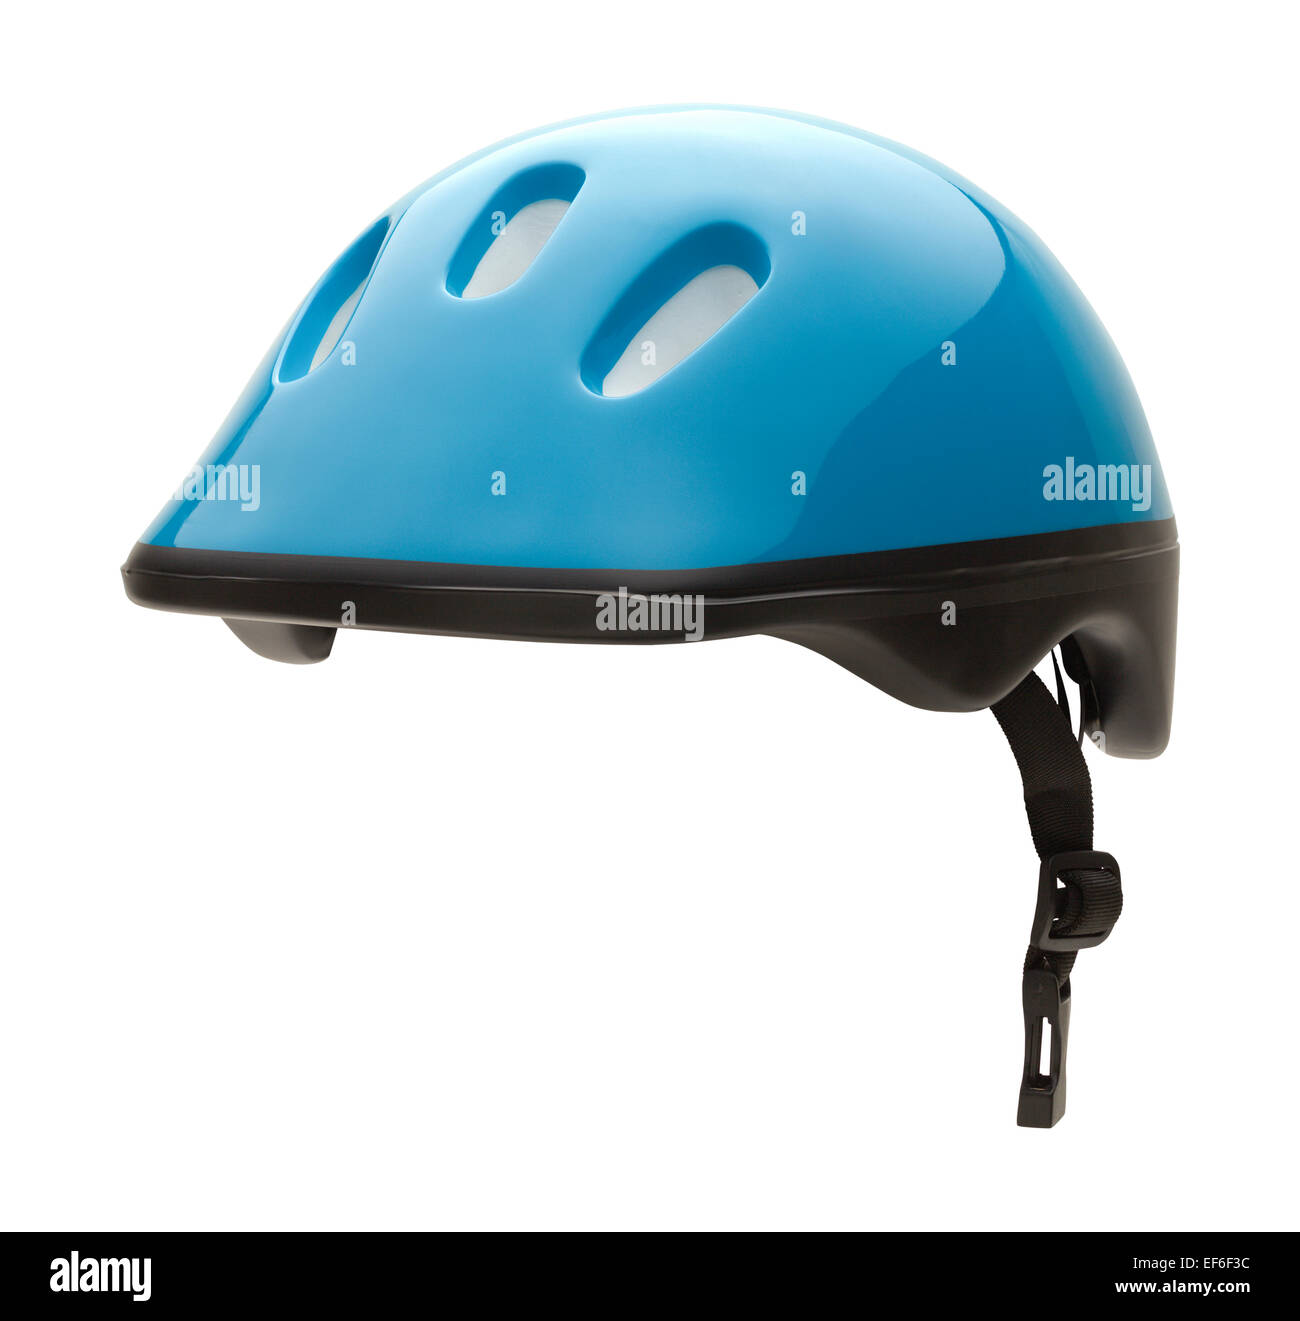 Blaue Kunststoff Bike Helm vorne Angle View Isolated On White Background. Stockfoto